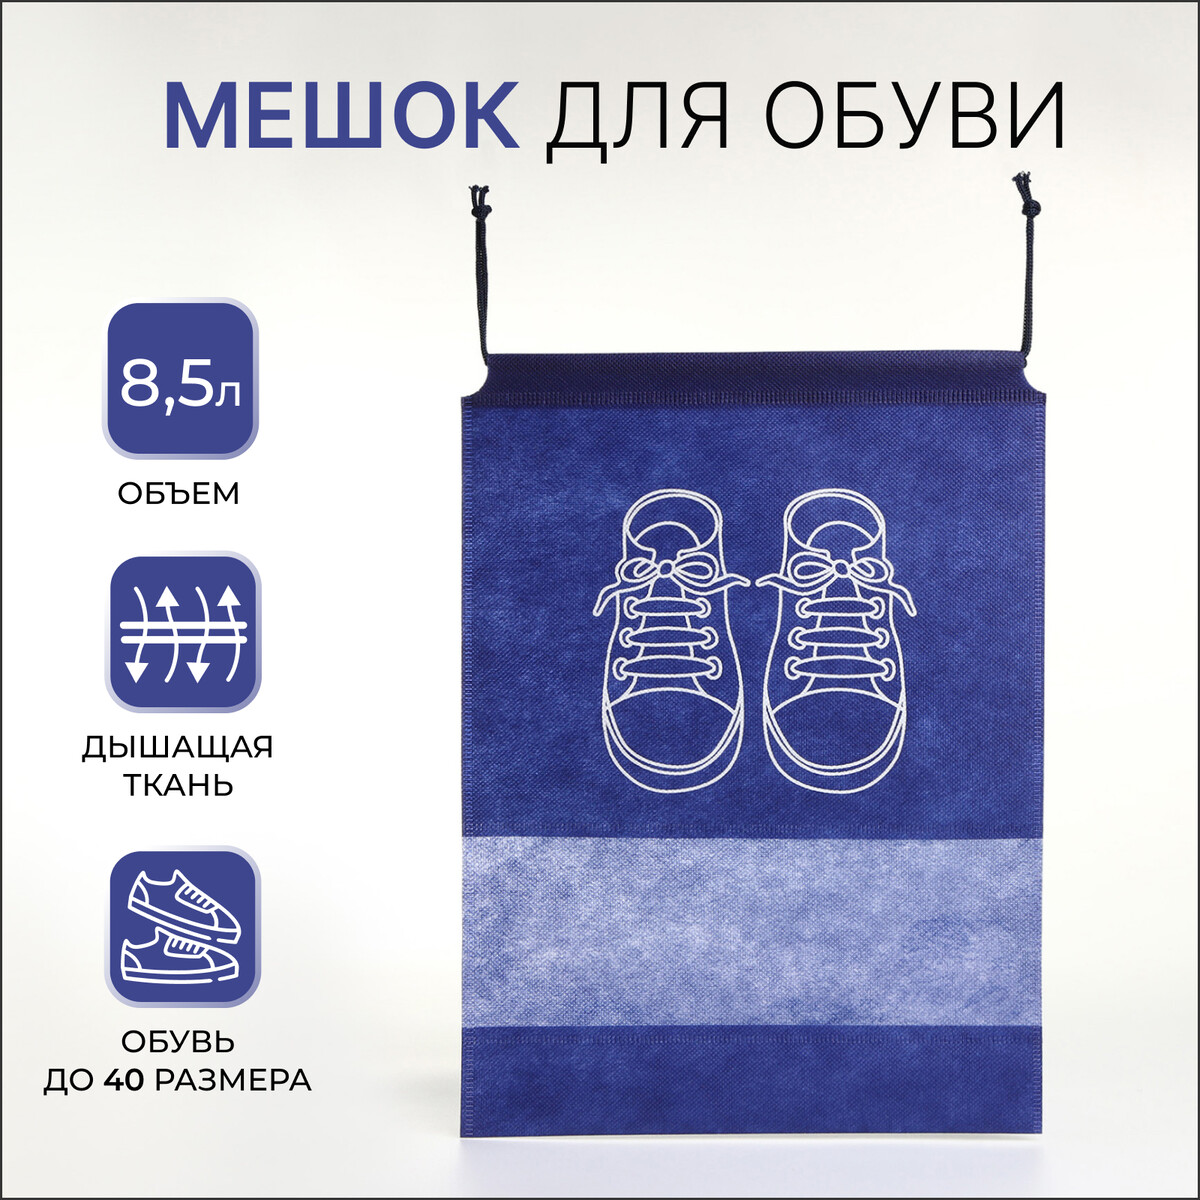 Мешок для обуви на шнурке, цвет синий мешок для обуви на шнурке белый синий